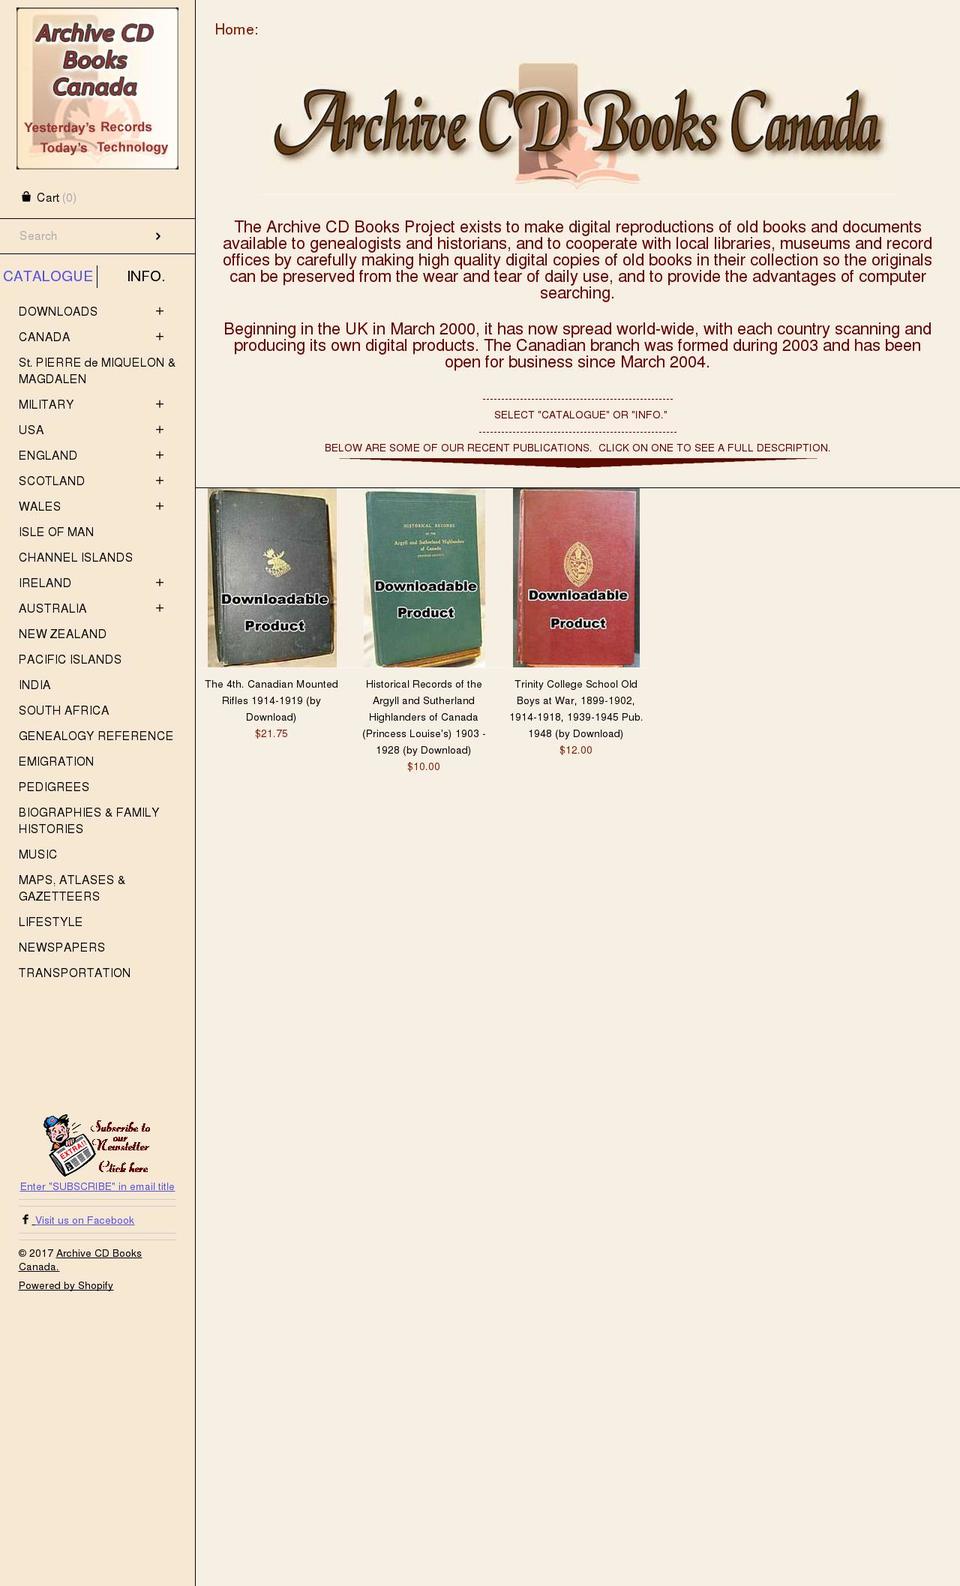 archivecdbooks.ca shopify website screenshot